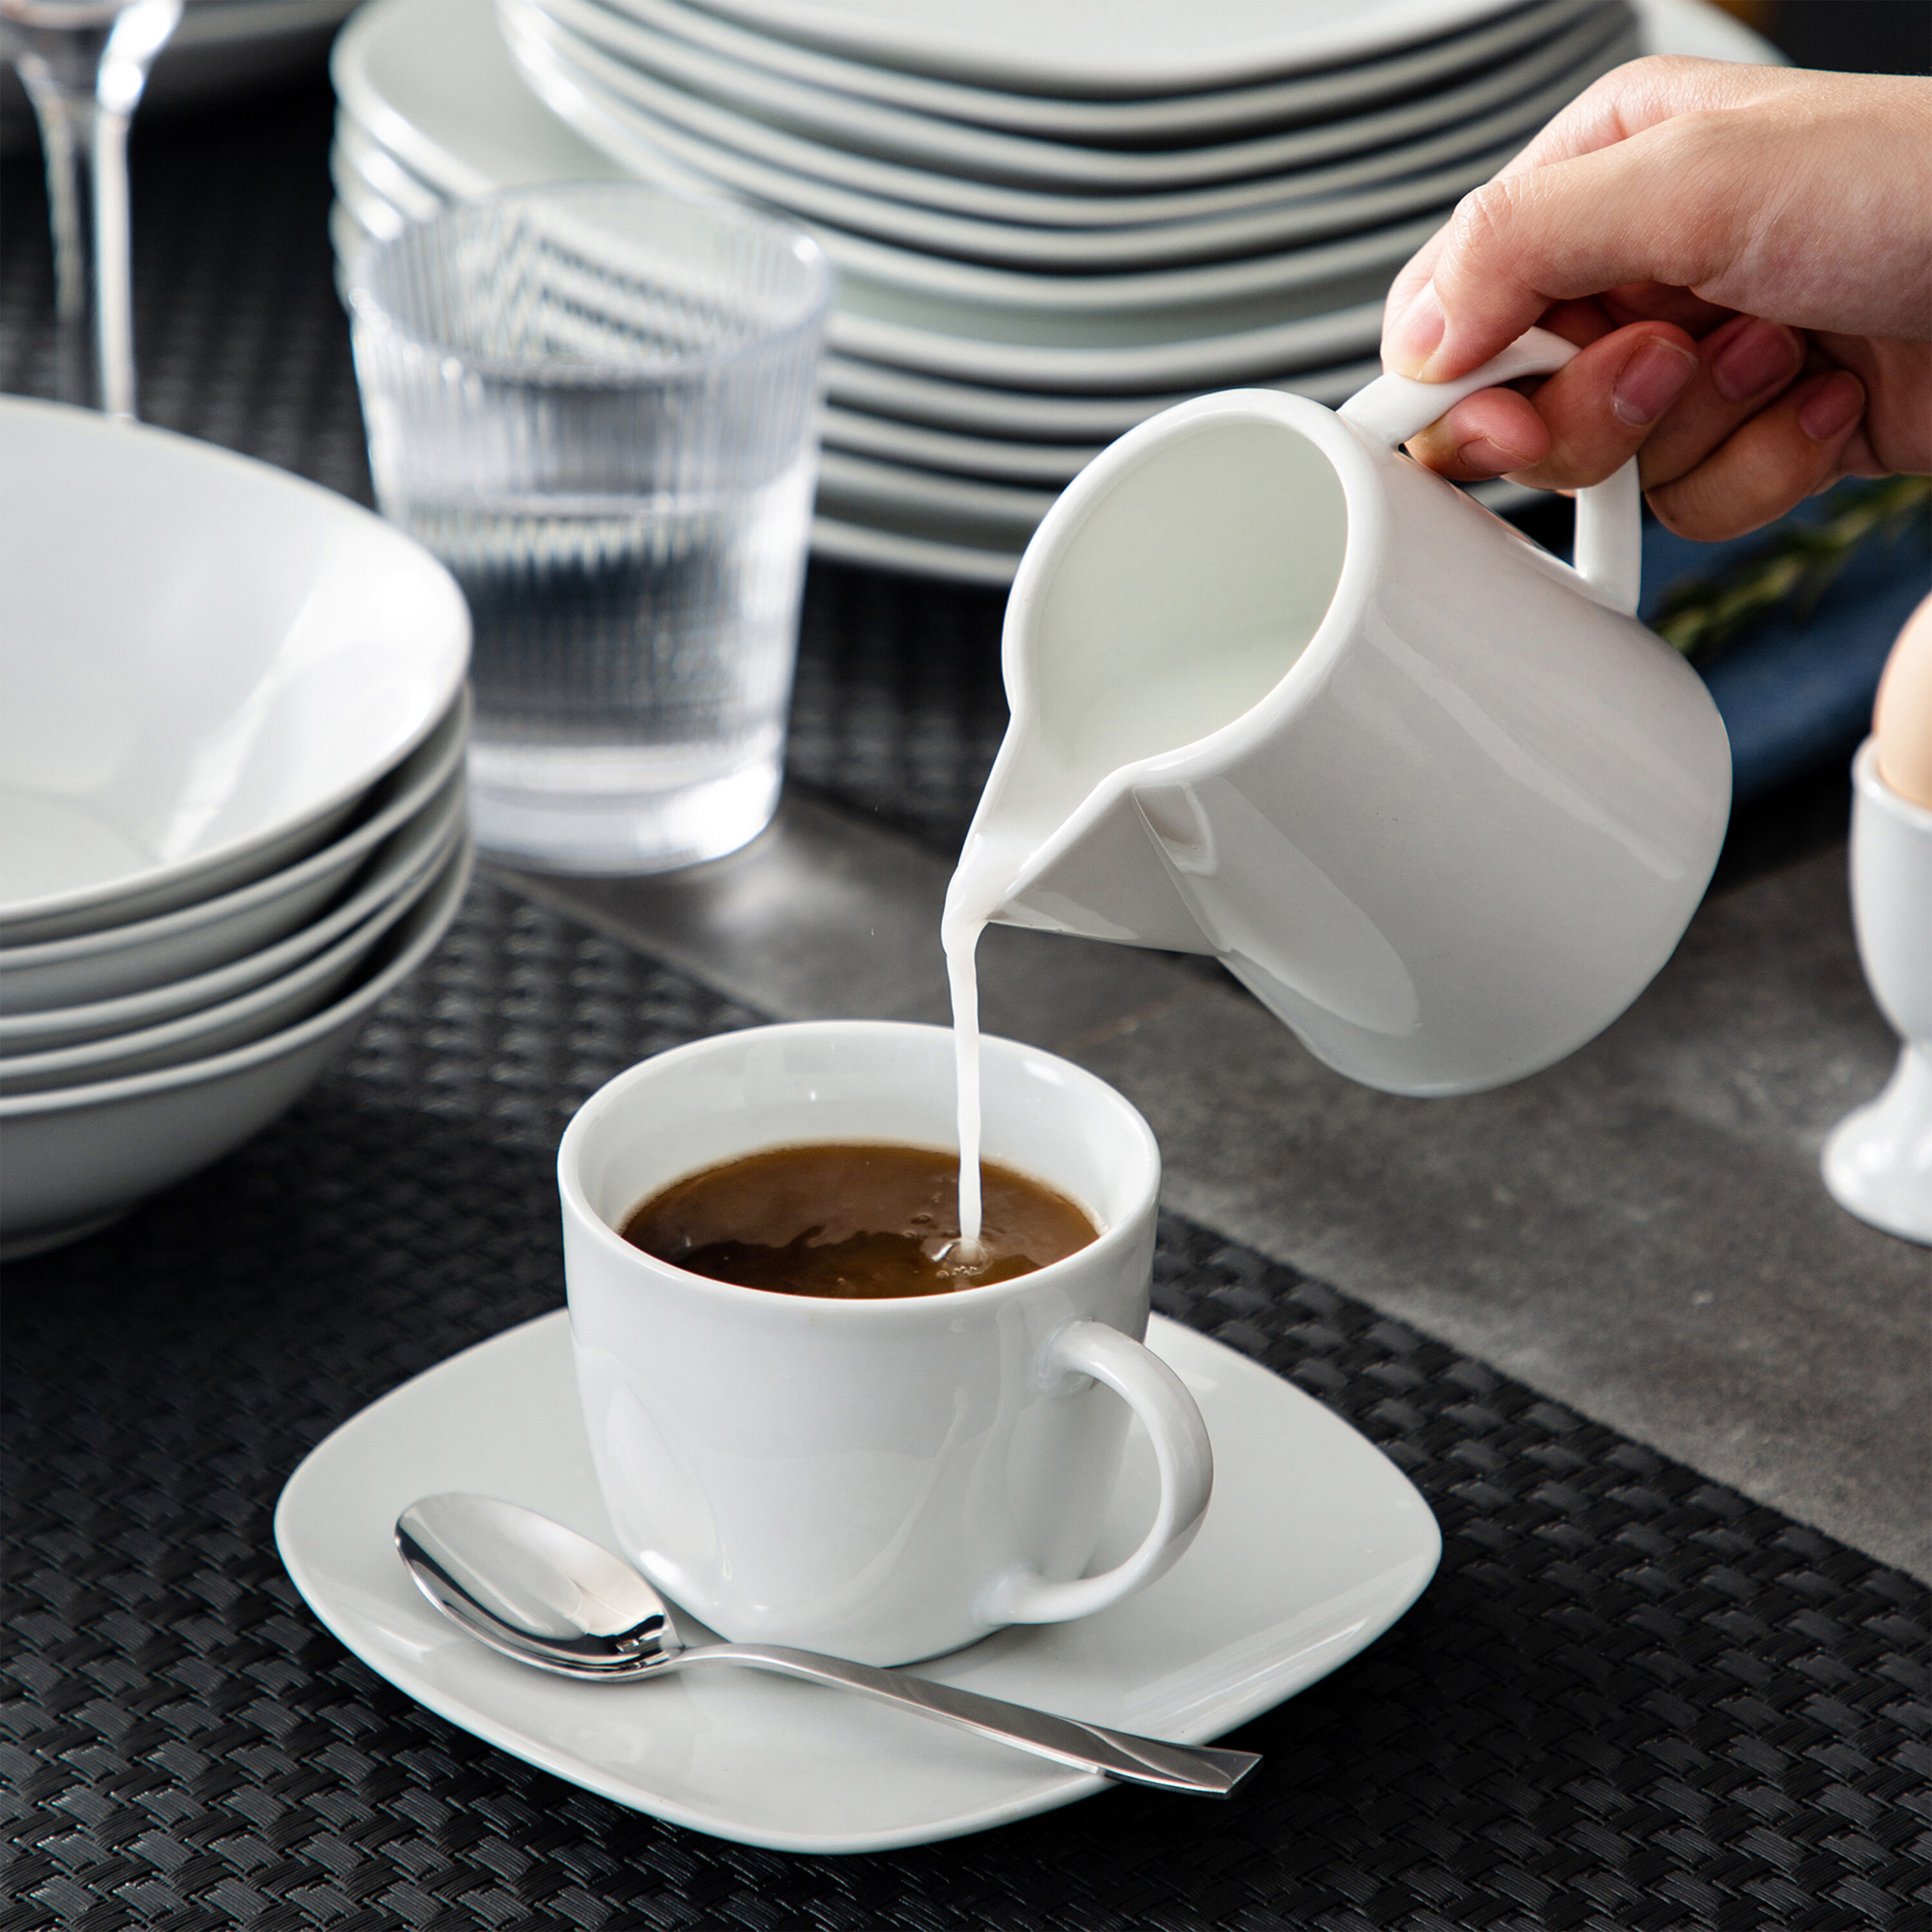 MALACASA Elisa 7.4 oz. White Porcelain Espresso/Cappuccino Cups